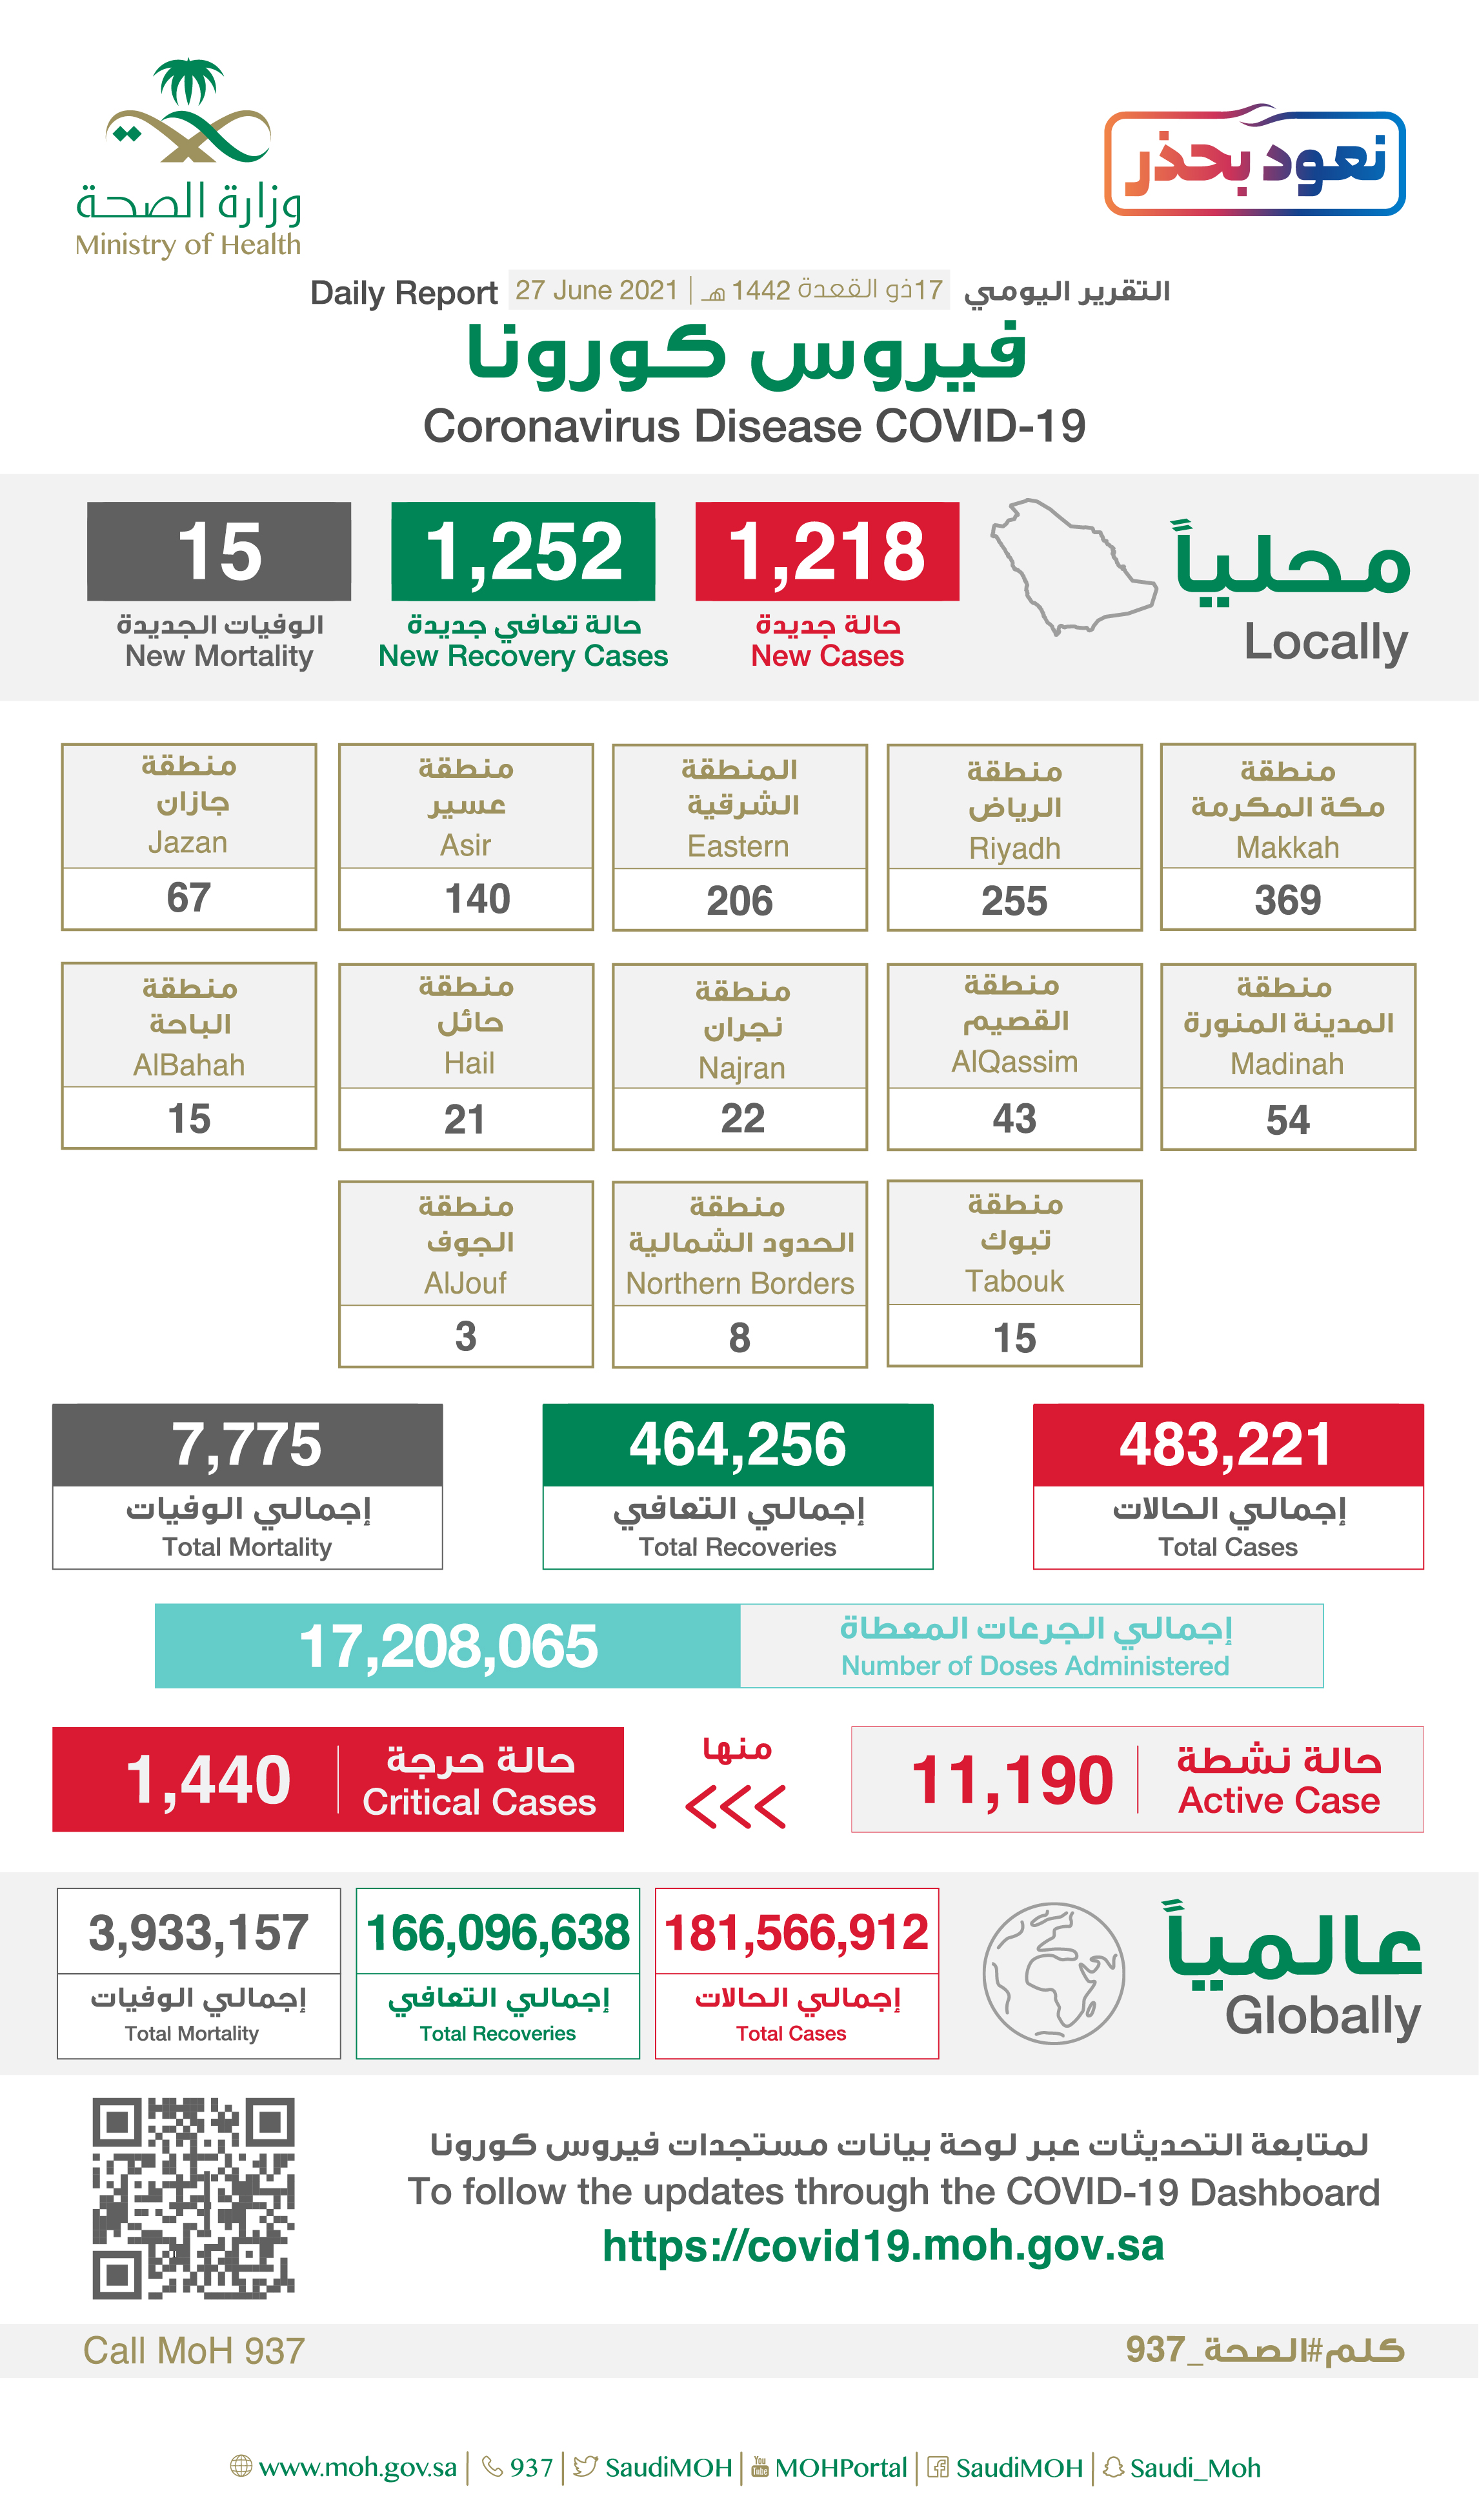 Saudi Arabia Coronavirus : Total Cases :483,221 , New Cases : 1,218 , Cured : 464,256 , Deaths: 7,775, Active Cases : 11,190